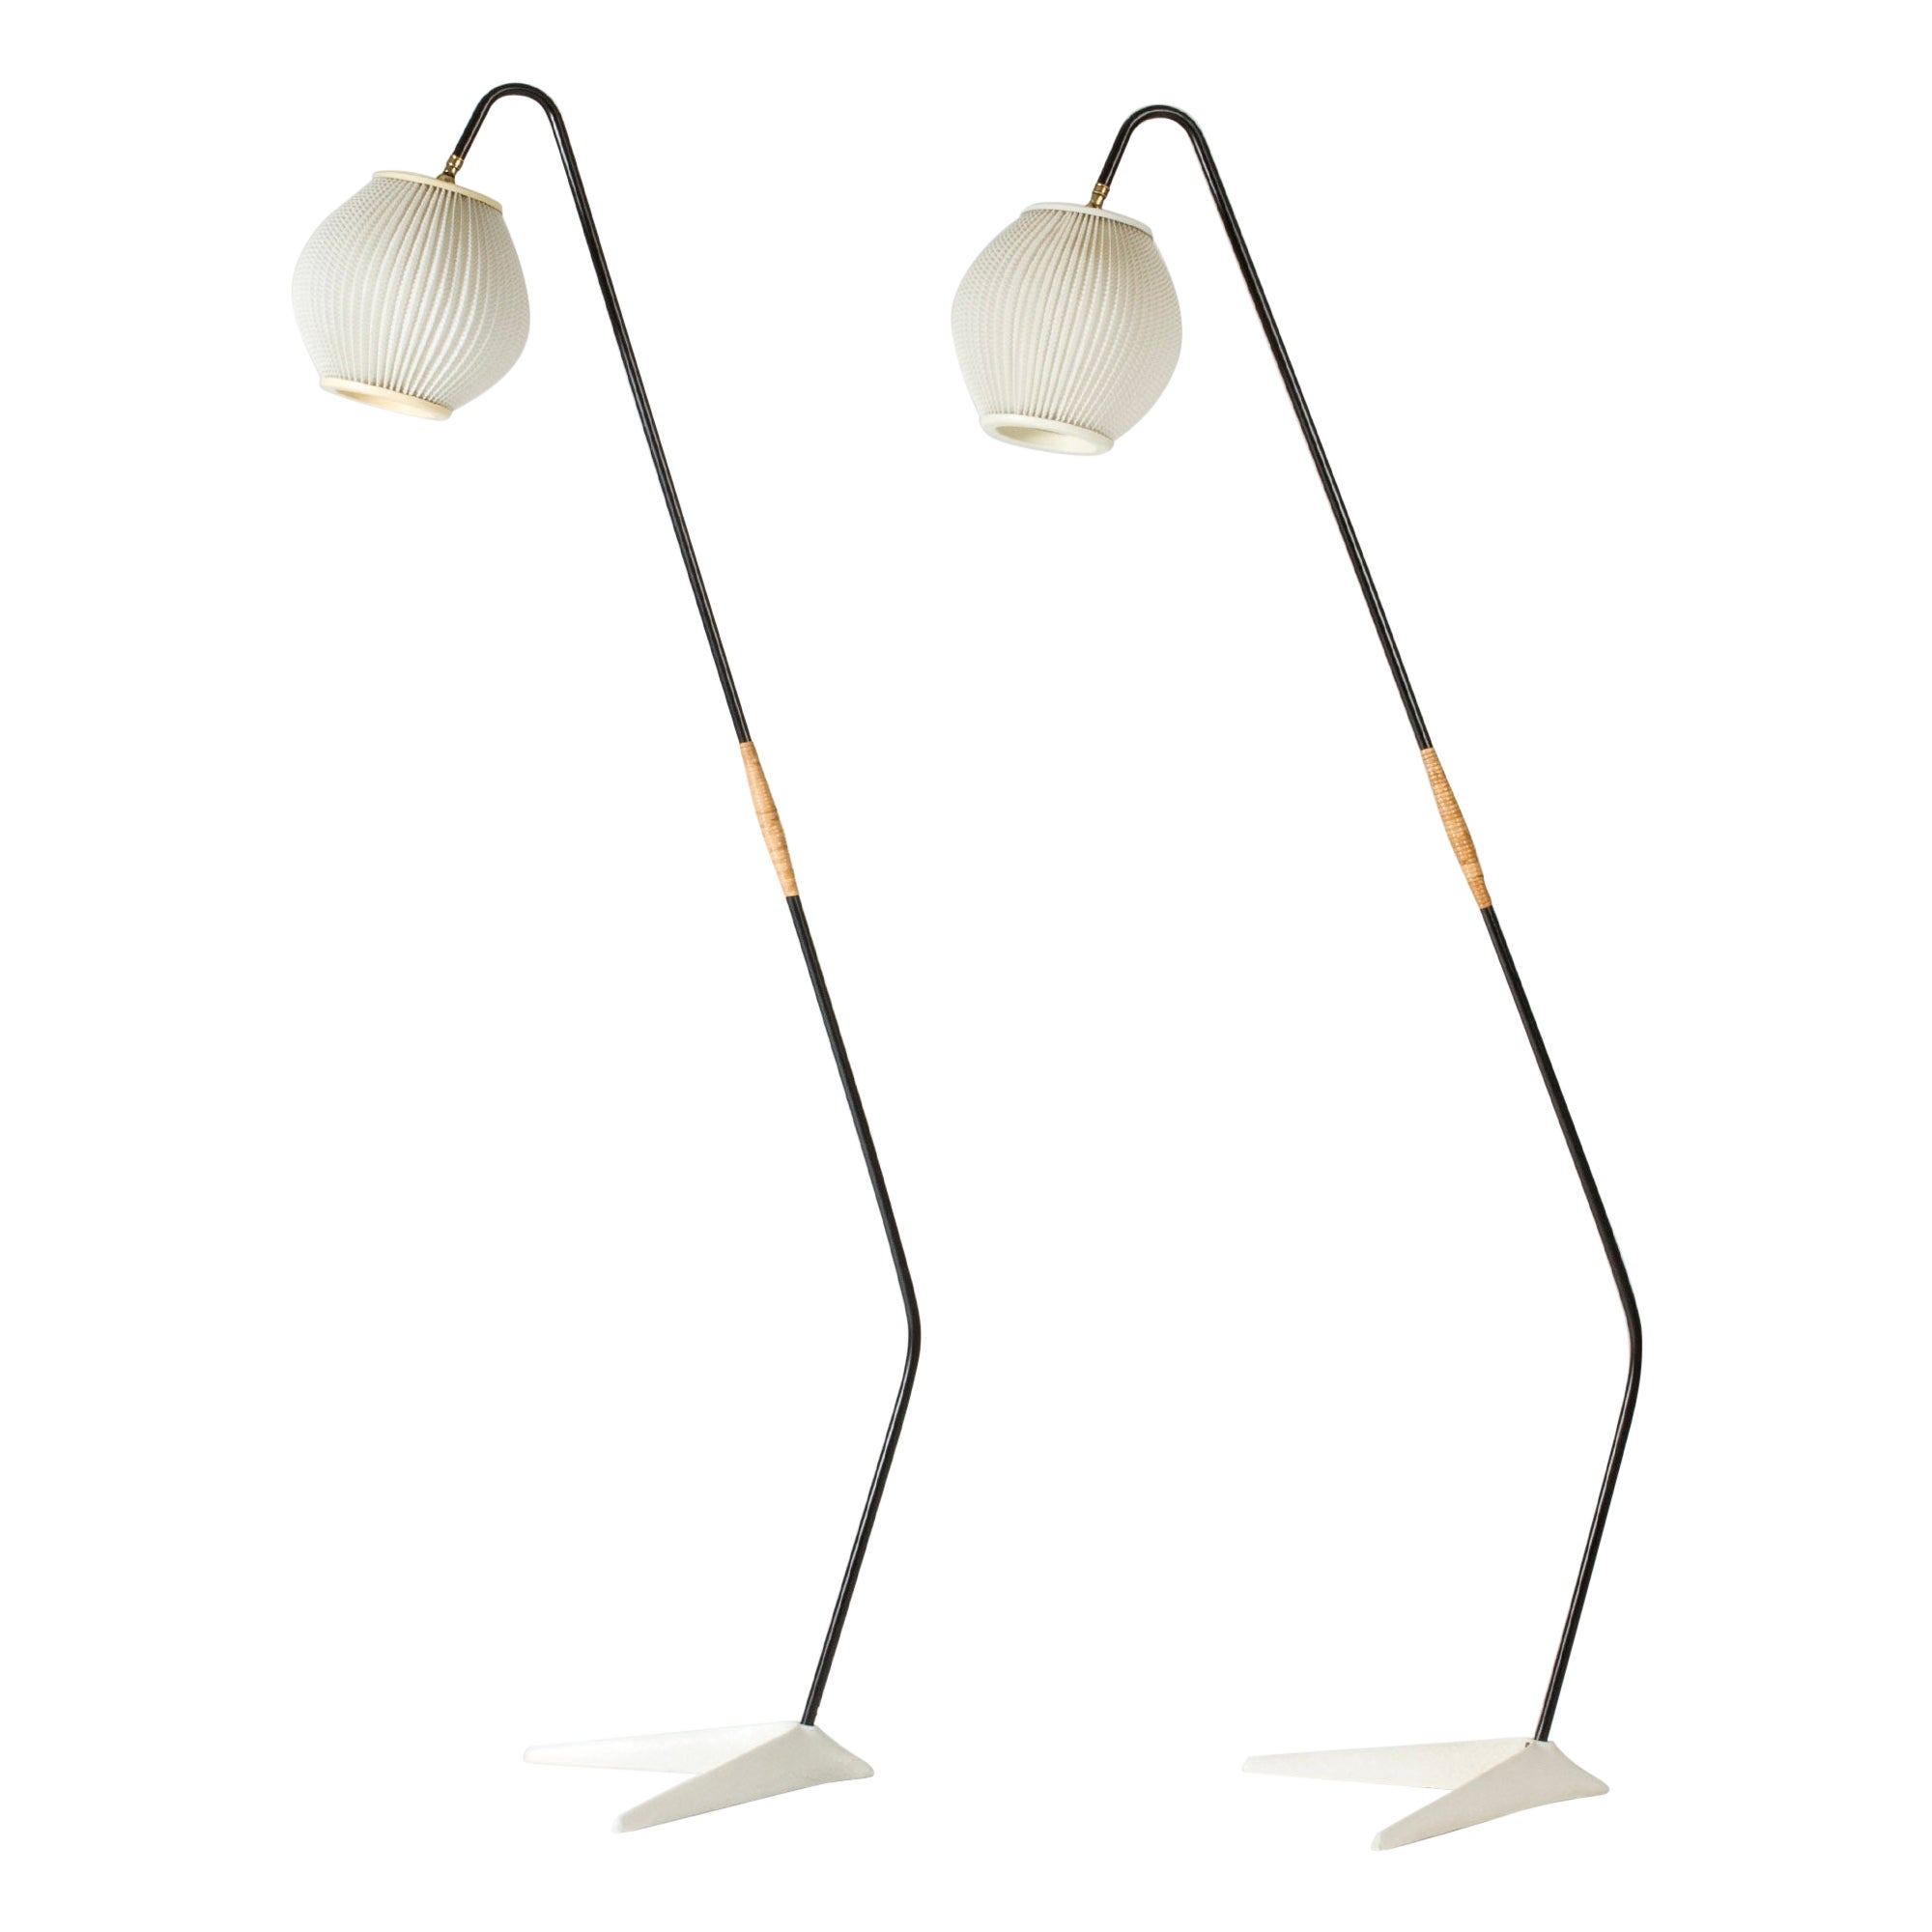 Pair of Modernist floor lamps by Svend Aage Holm Sørensen, Denmark, 1950s For Sale